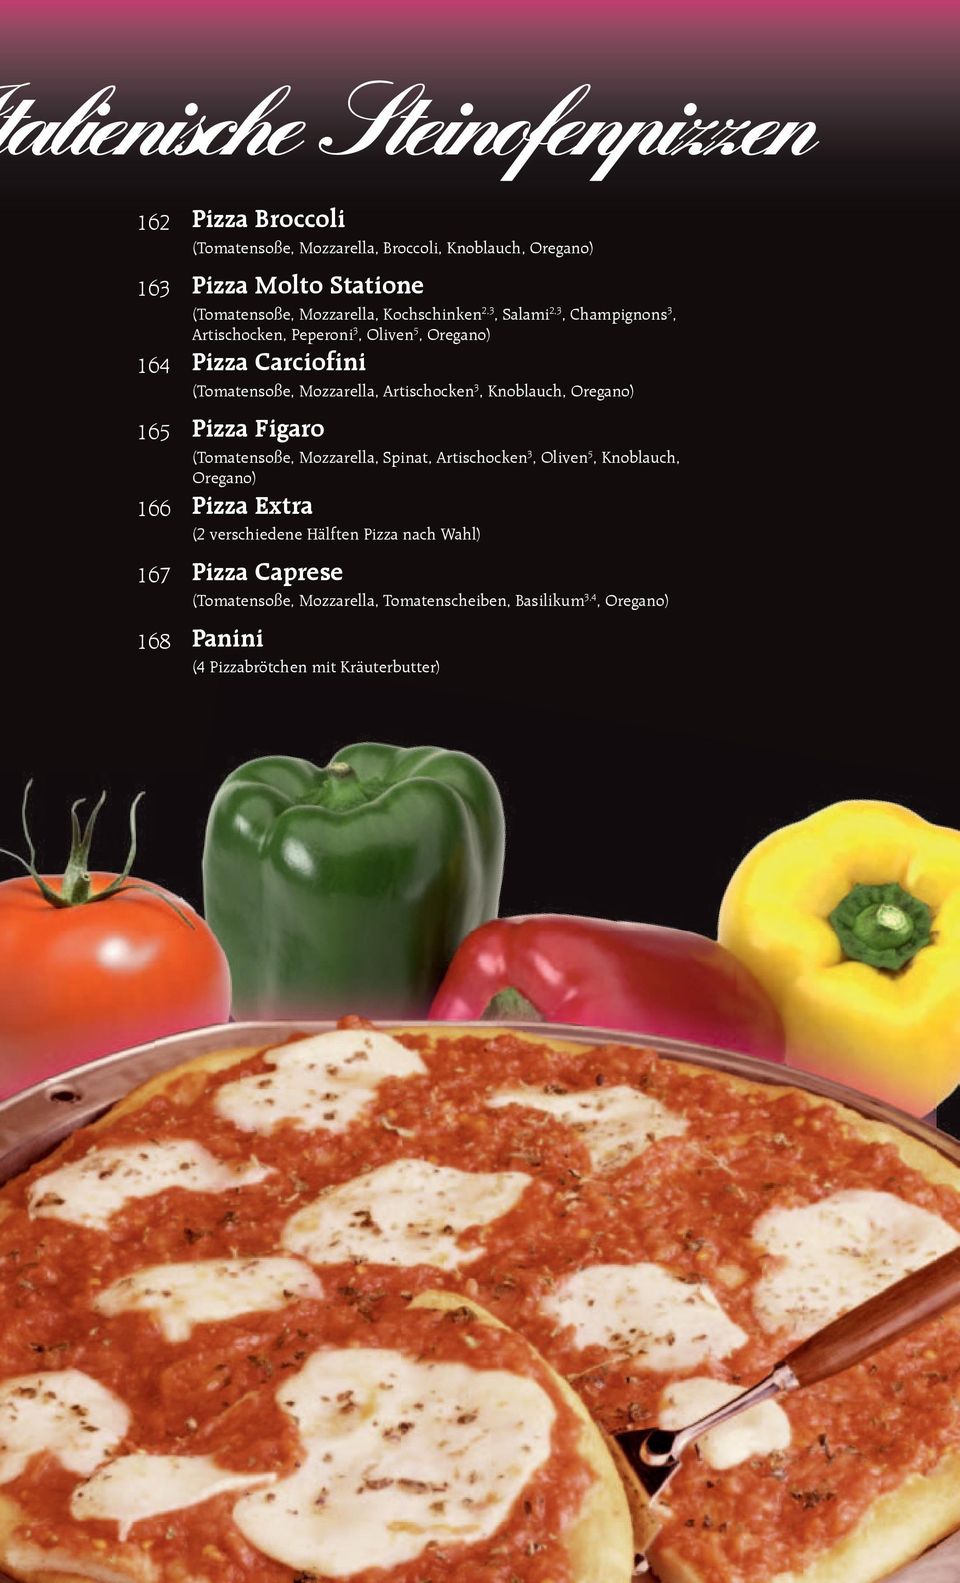 Knoblauch, Oregano) 165 Pizza Figaro (Tomatensoße, Mozzarella, Spinat, Artischocken 3, Oliven 5, Knoblauch, Oregano) 166 Pizza Extra (2 verschiedene